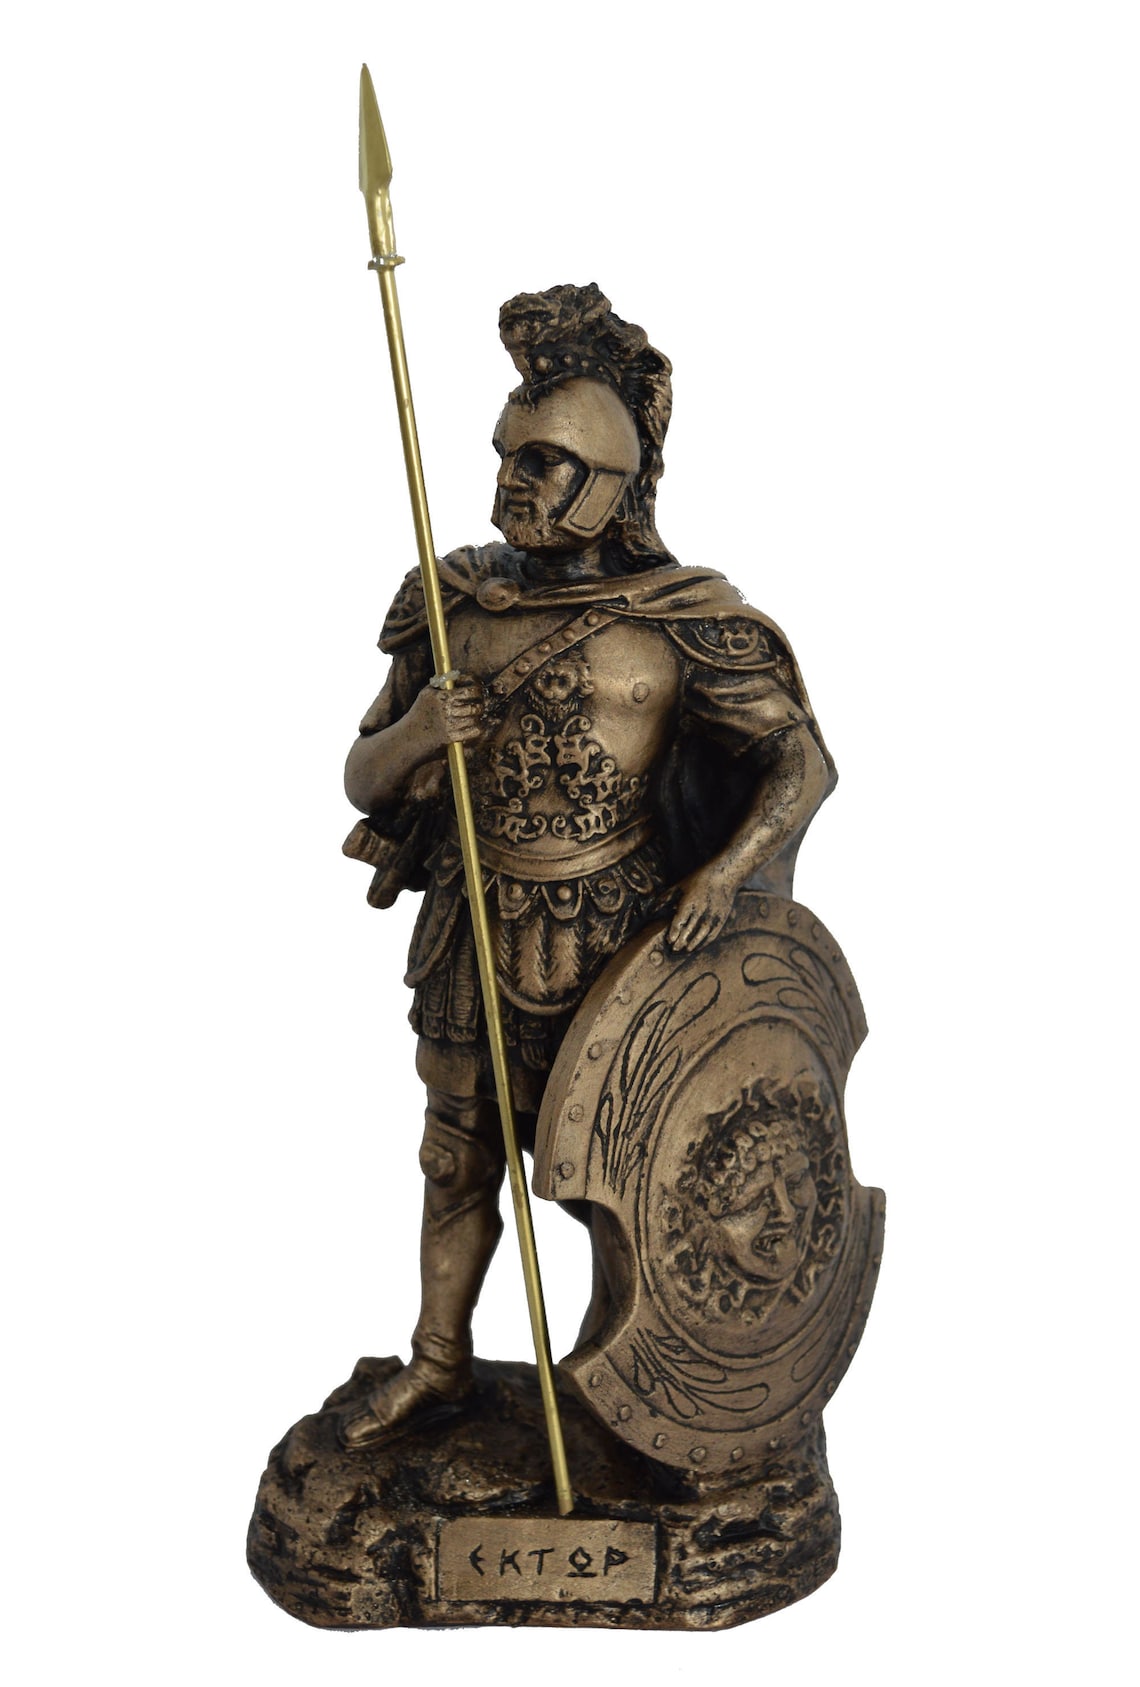 Prince Hector Statue Sculpture Hero of Trojan War Battle | Etsy